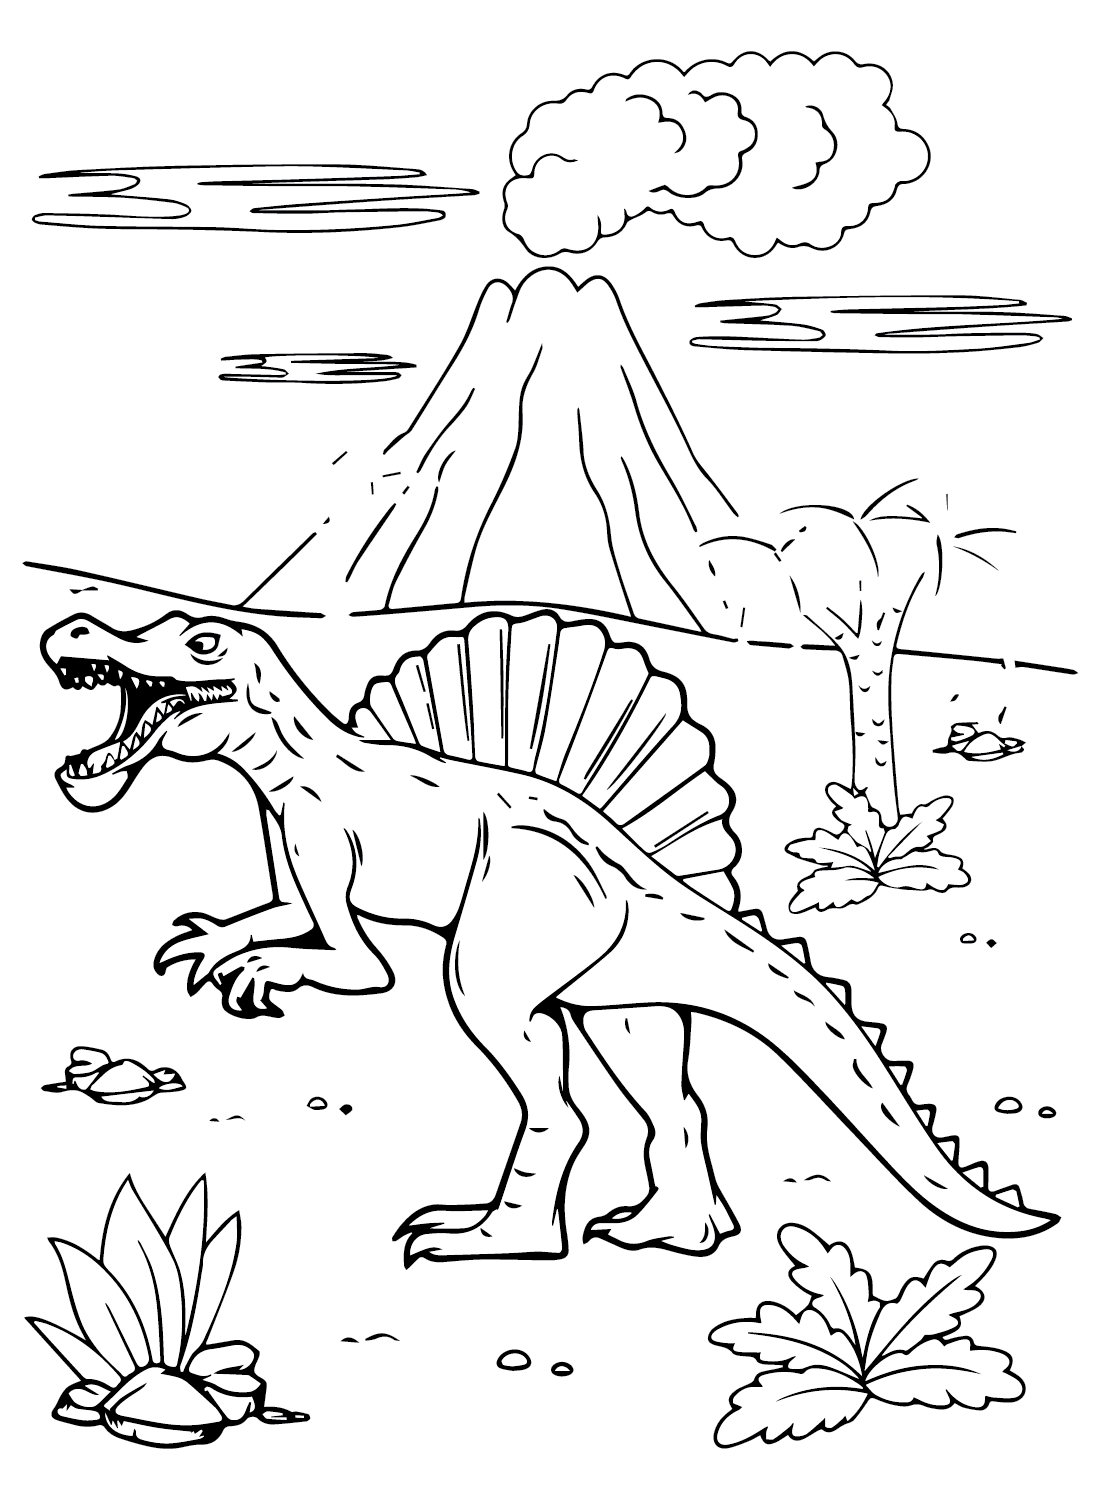 Spinosaurus Aegyptiacus Kleurplaten om te downloaden van Spinosaurus Aegyptiacus